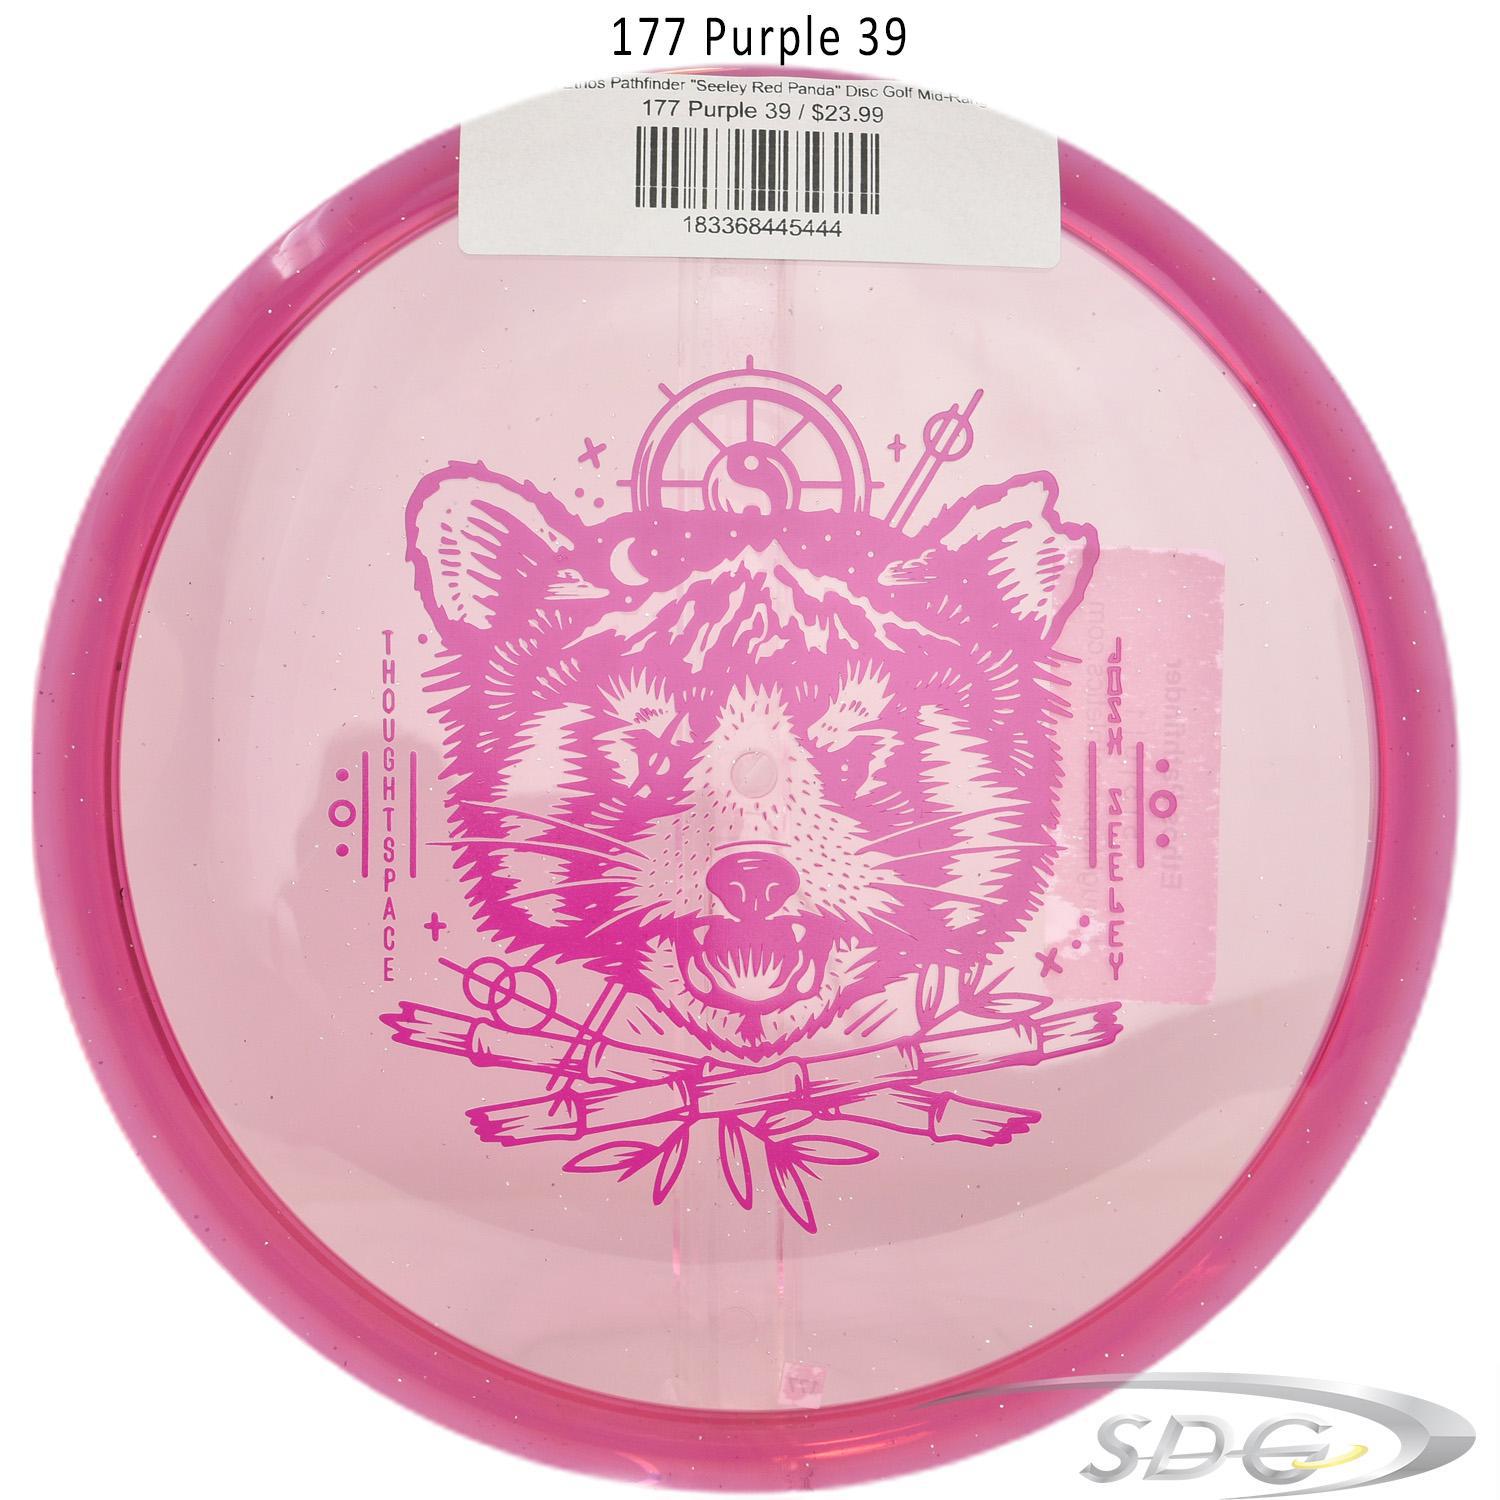 tsa-ethos-pathfinder-seeley-red-panda-disc-golf-mid-range 177 Purple 39 